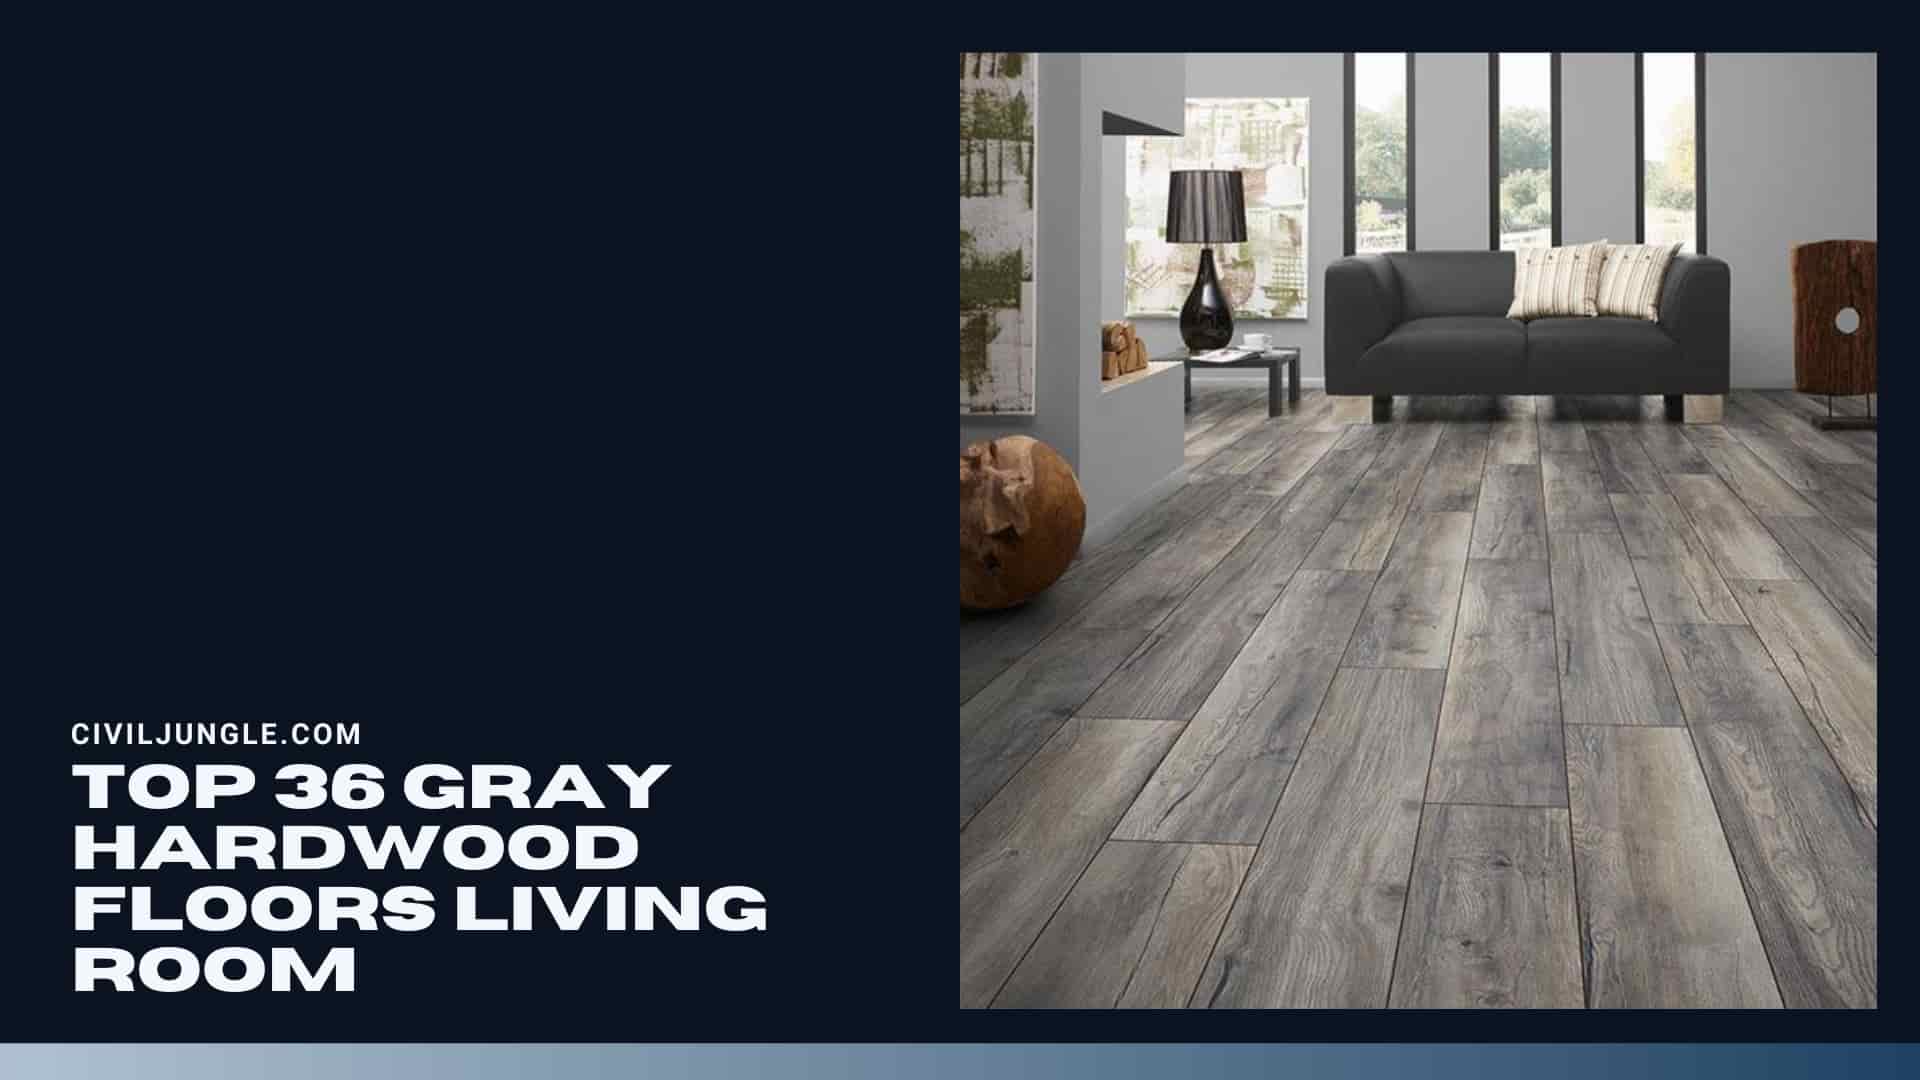 Top 36 Gray Hardwood Floors Living Room